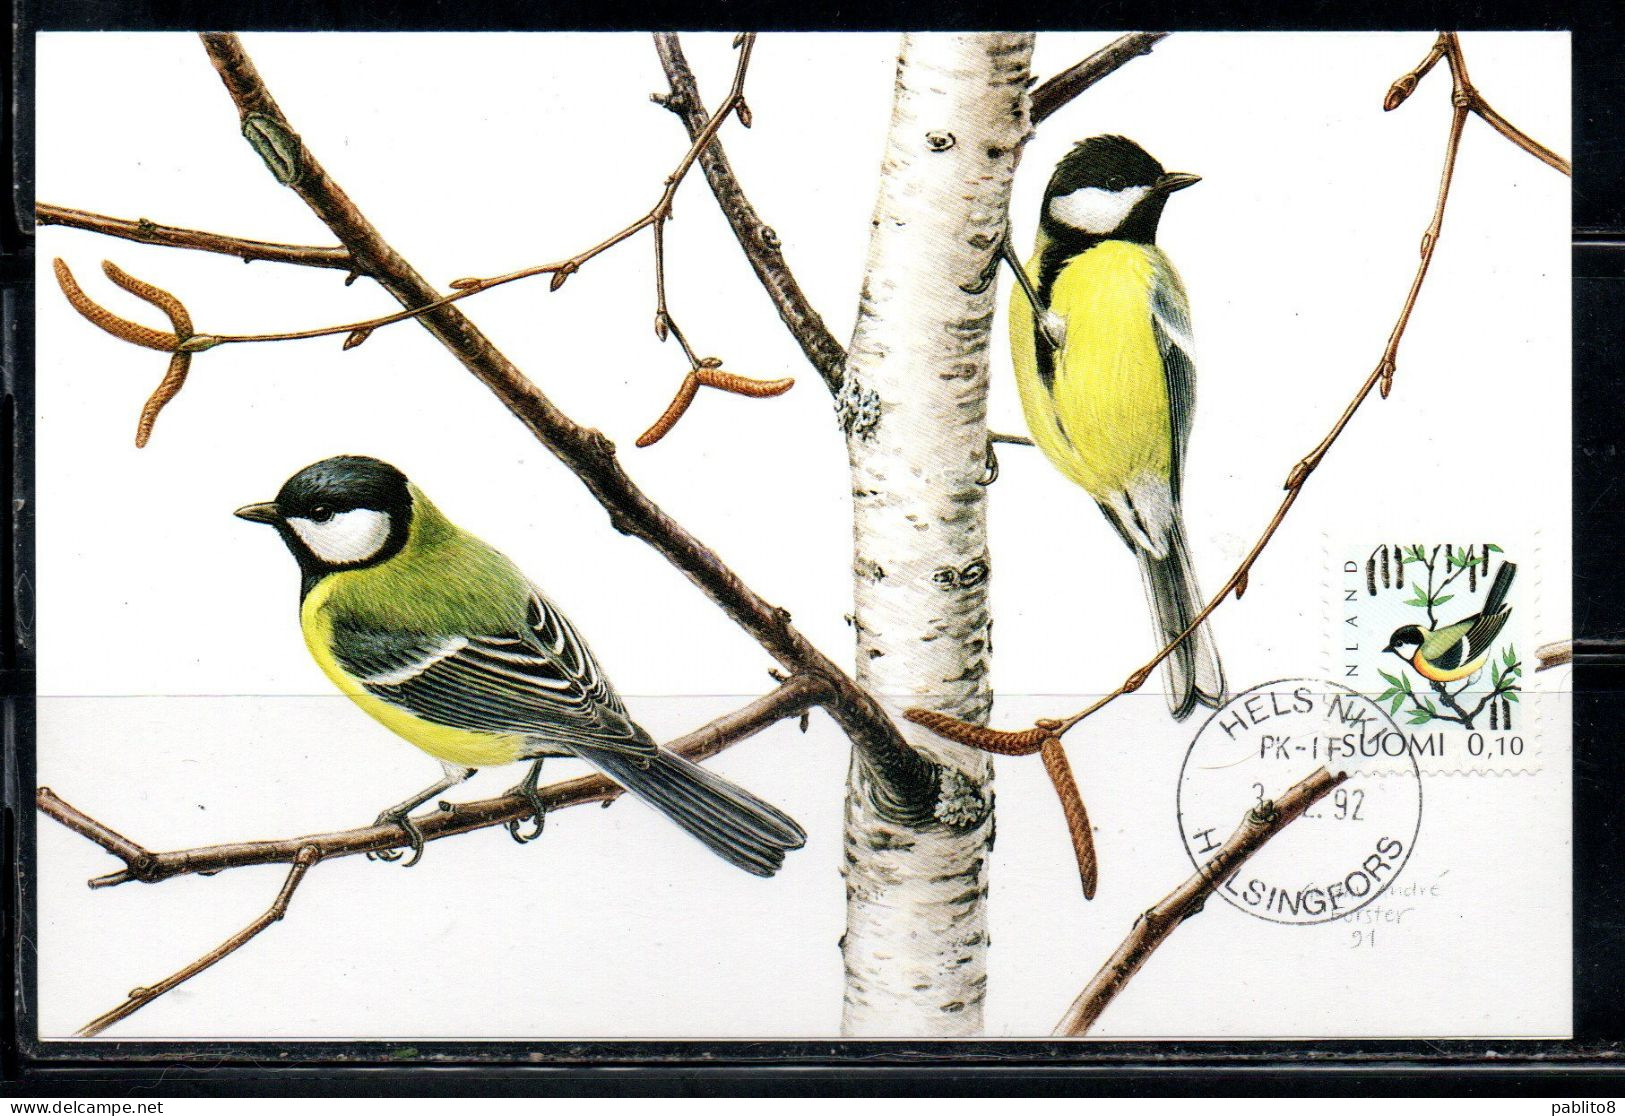 SUOMI FINLAND FINLANDIA FINLANDE 1991 1992 BIRDS FAUNA WAGTAIL BIRD 10p MAXI MAXIMUM CARD - Cartes-maximum (CM)